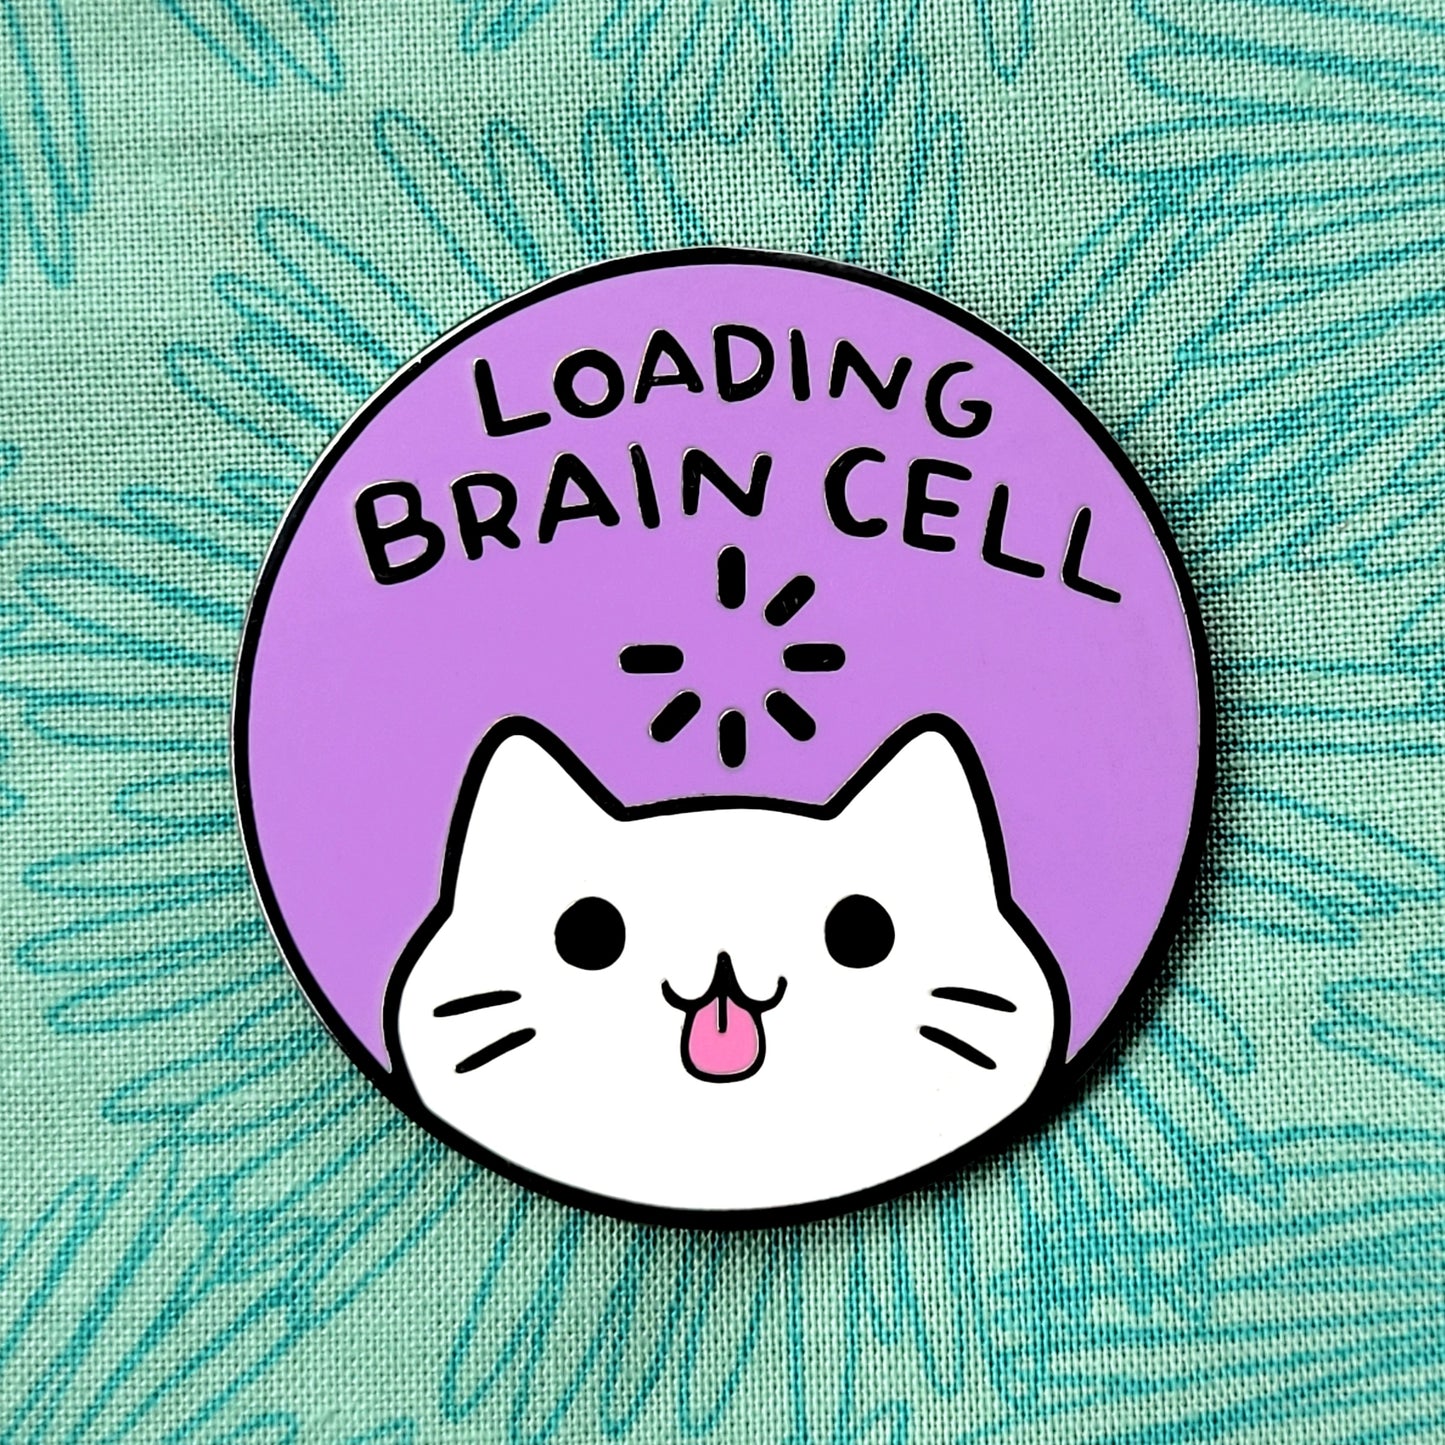 Loading Brain Cell White Enamel Pin